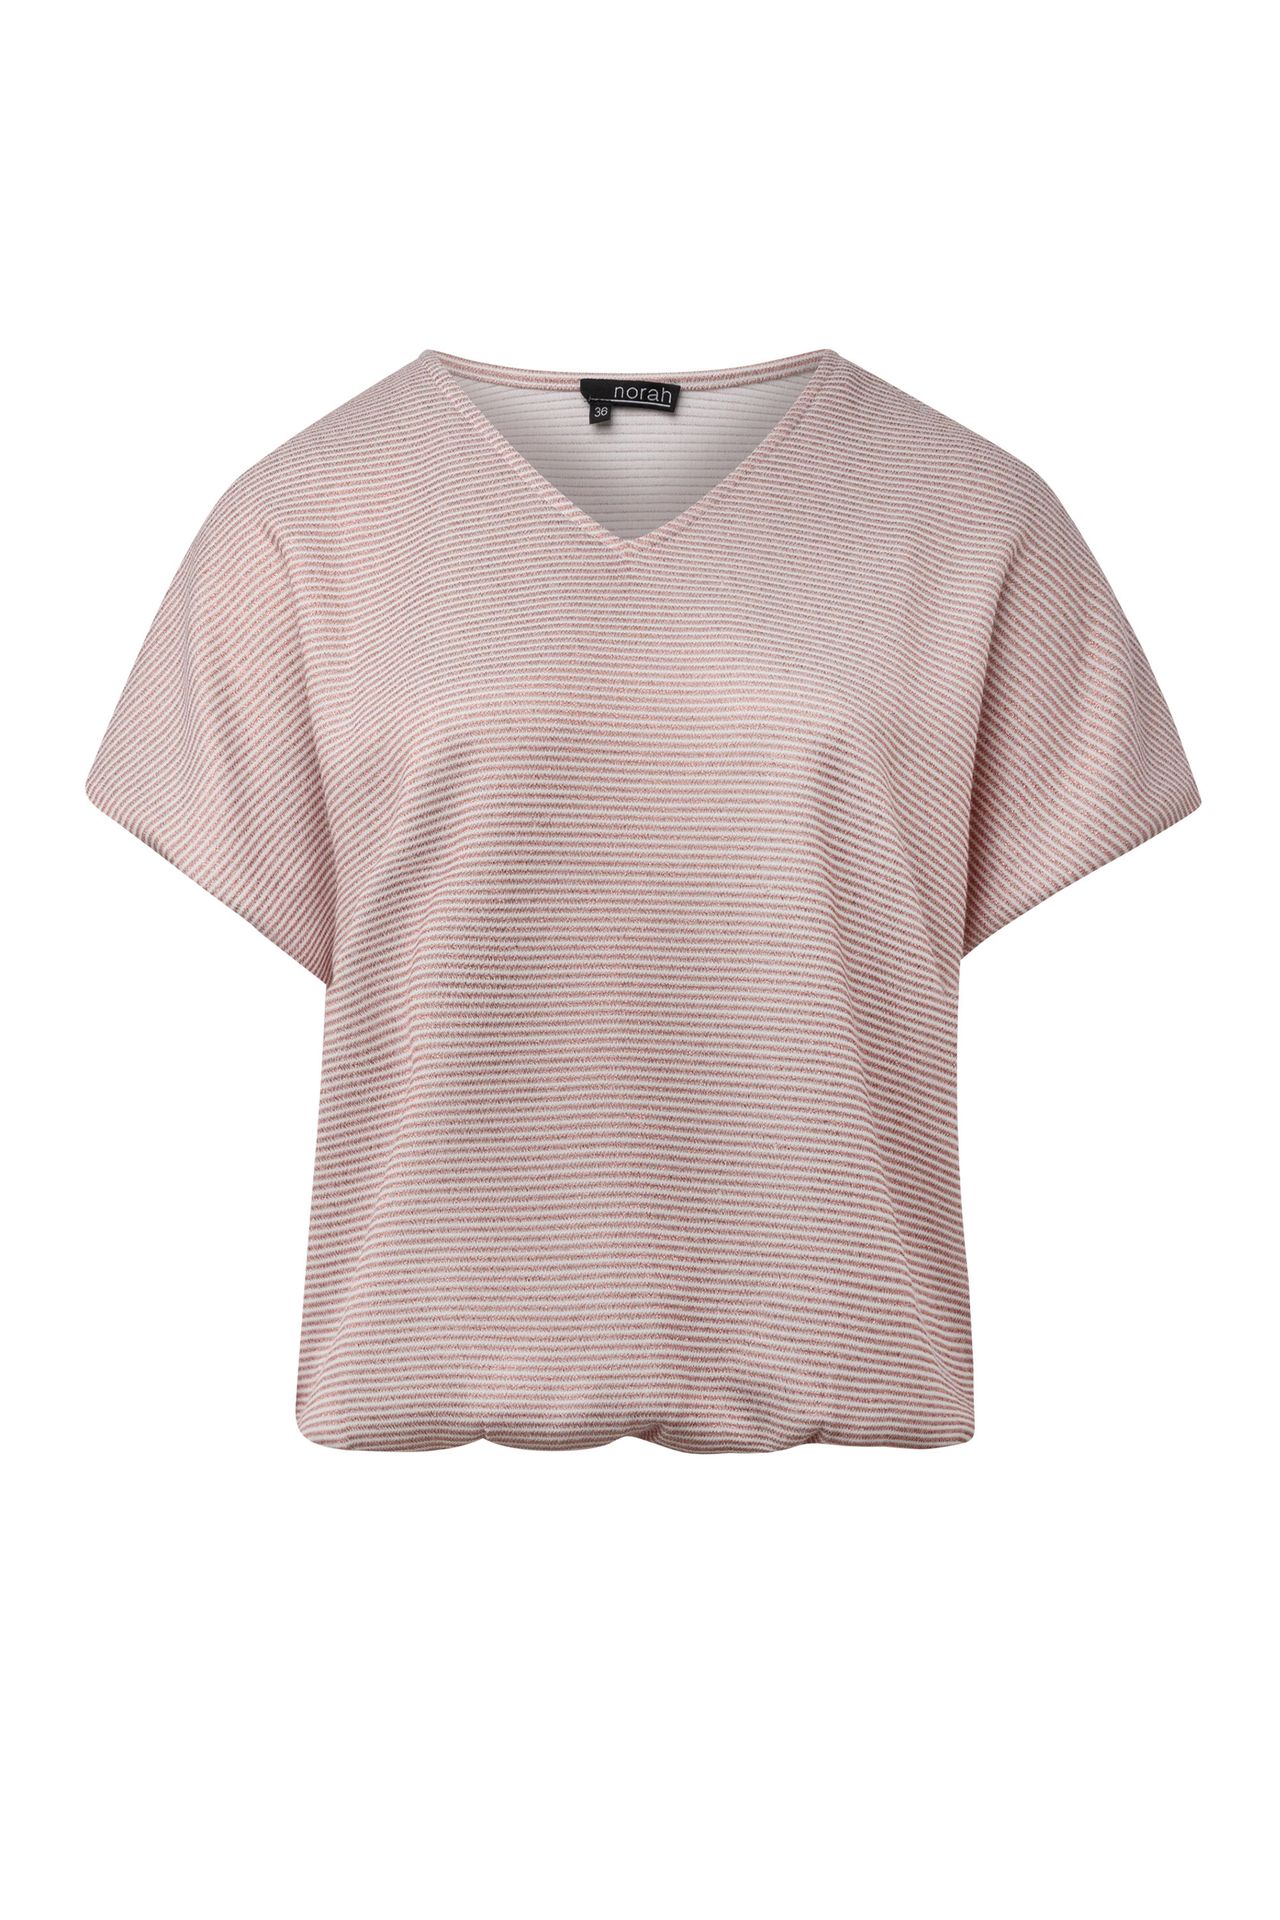 Norah Roze shirt met glitters pink/white 214770-931